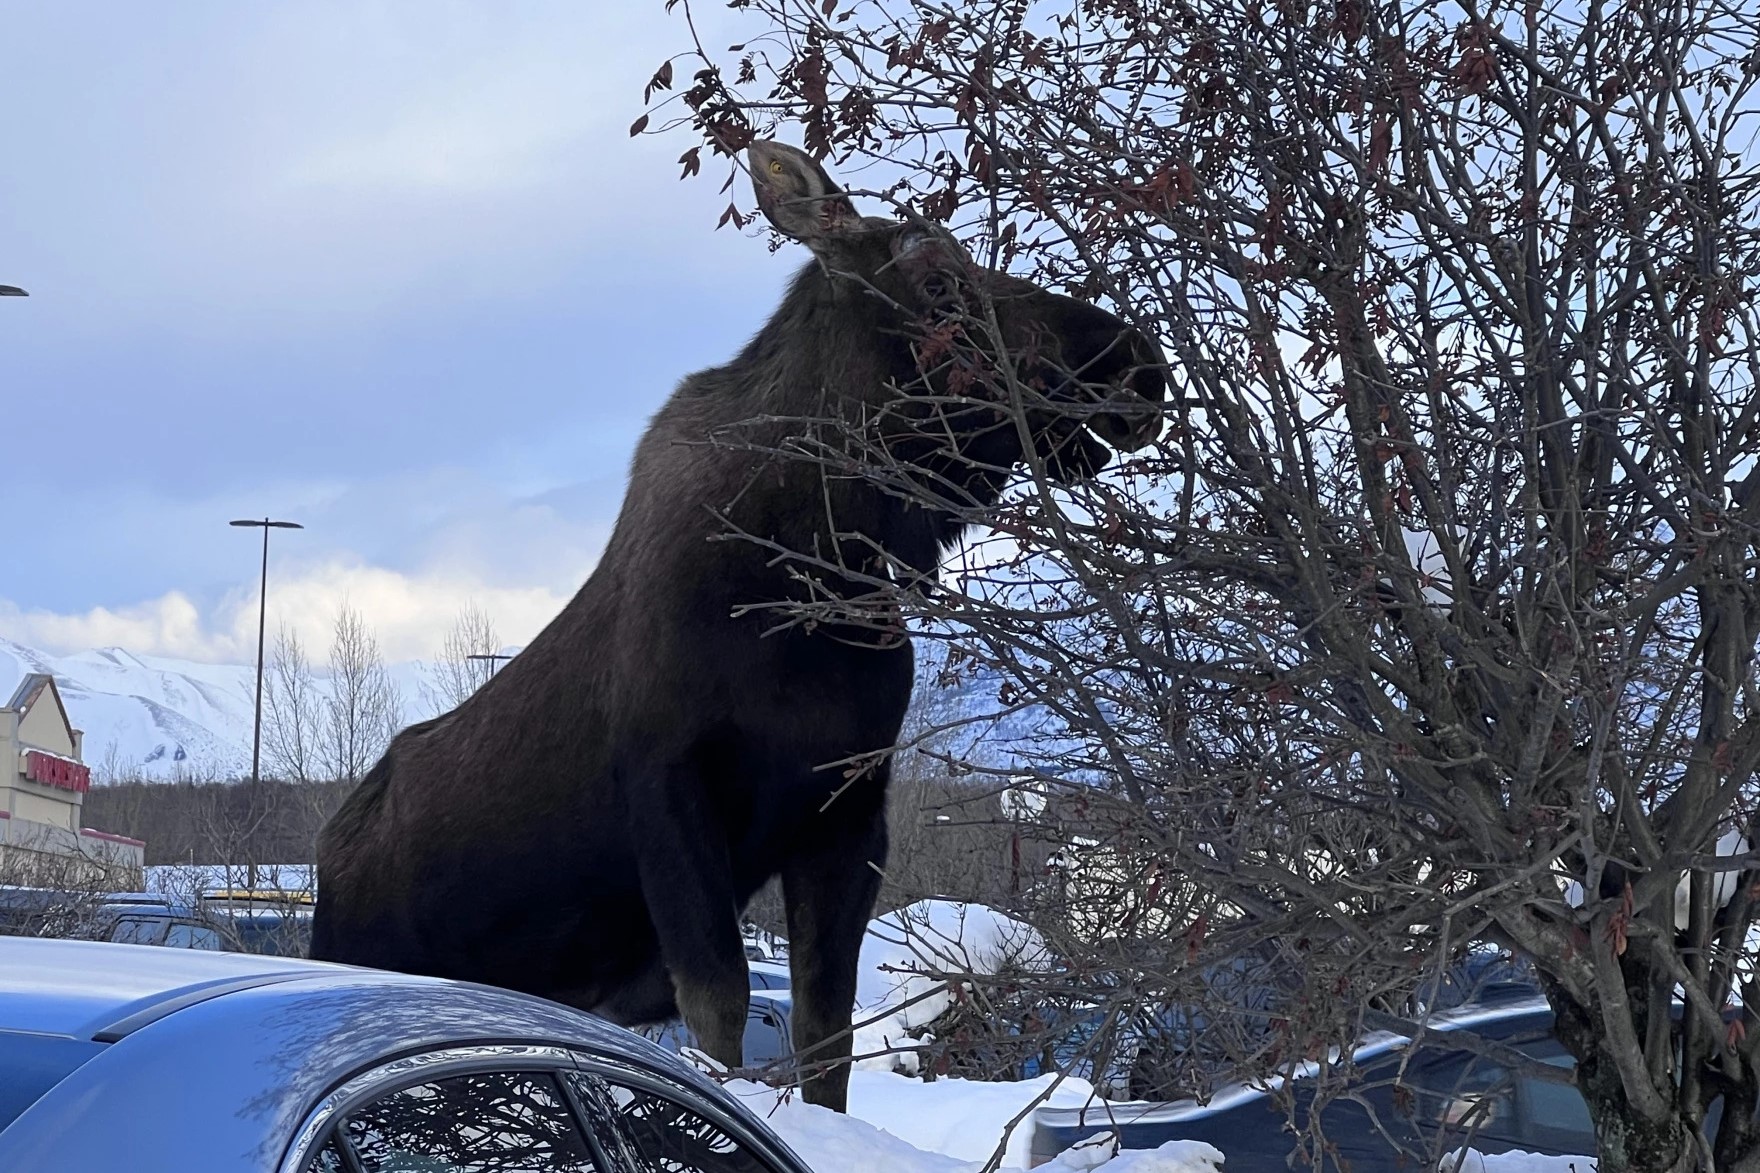 a moose eats some shrubs